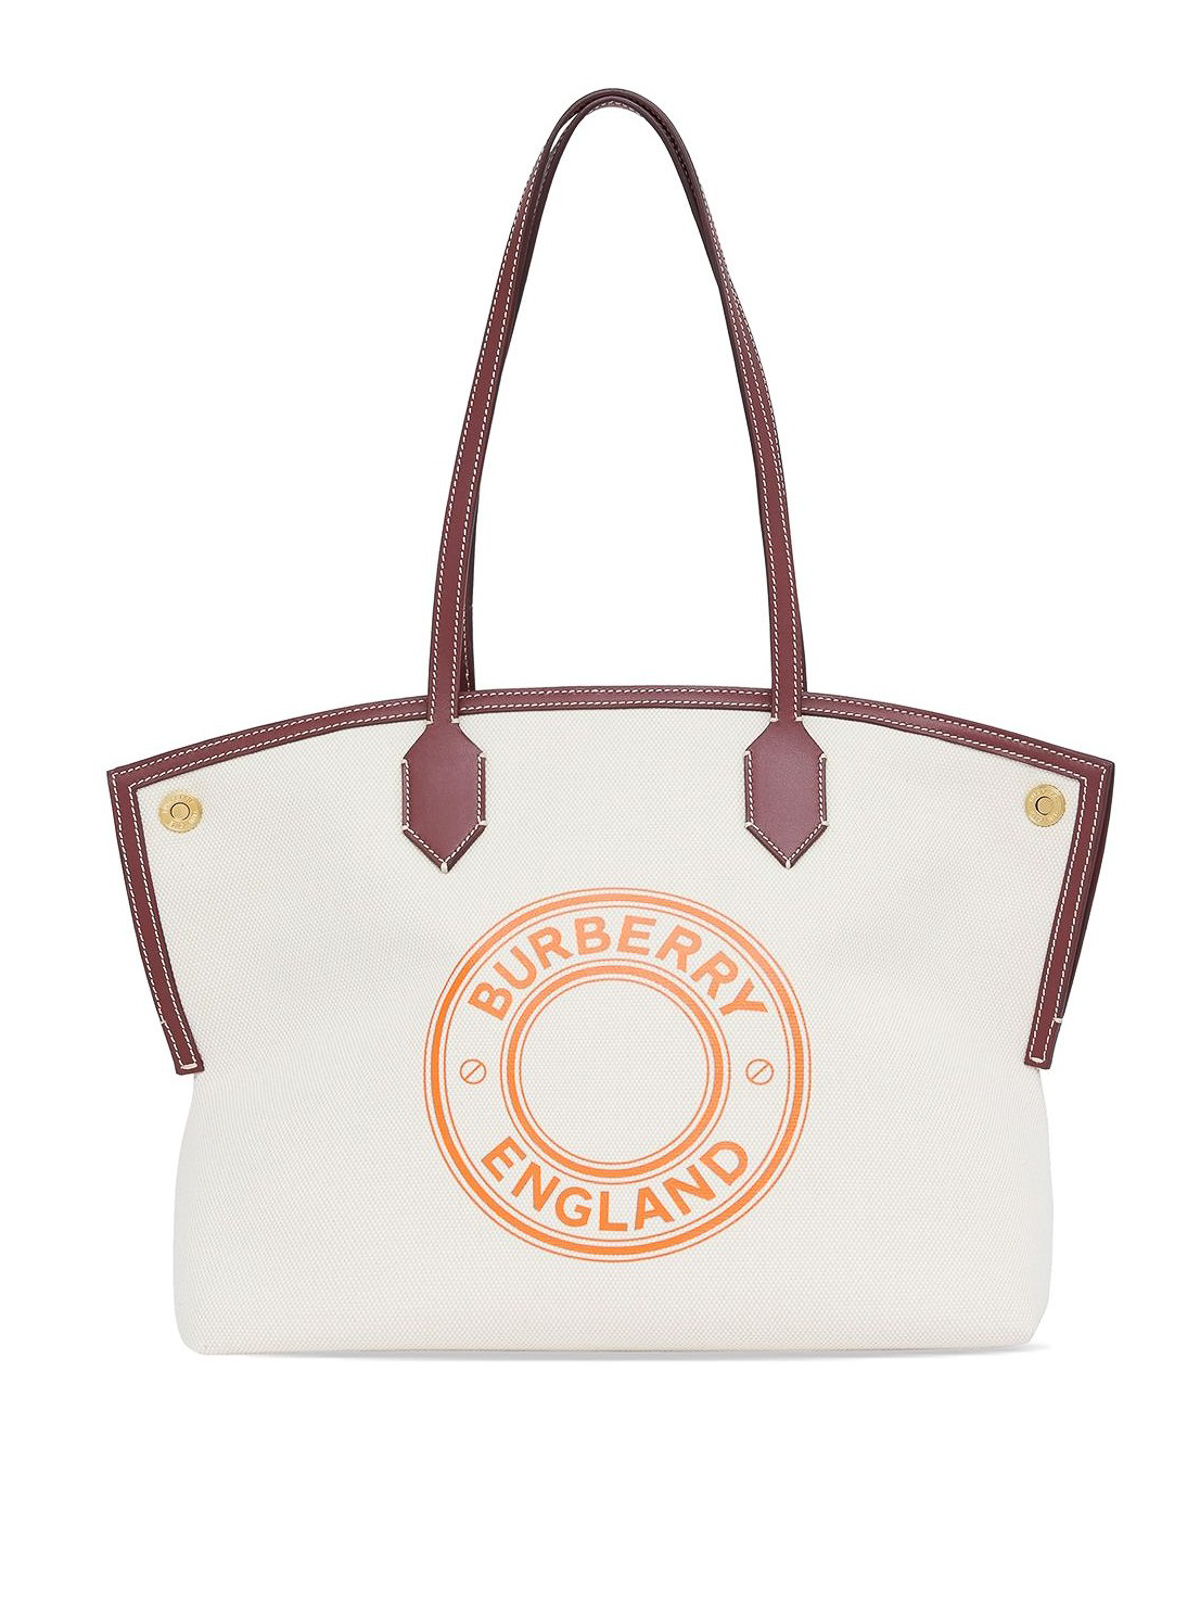 Burberry society medium tote bag( Authentic)